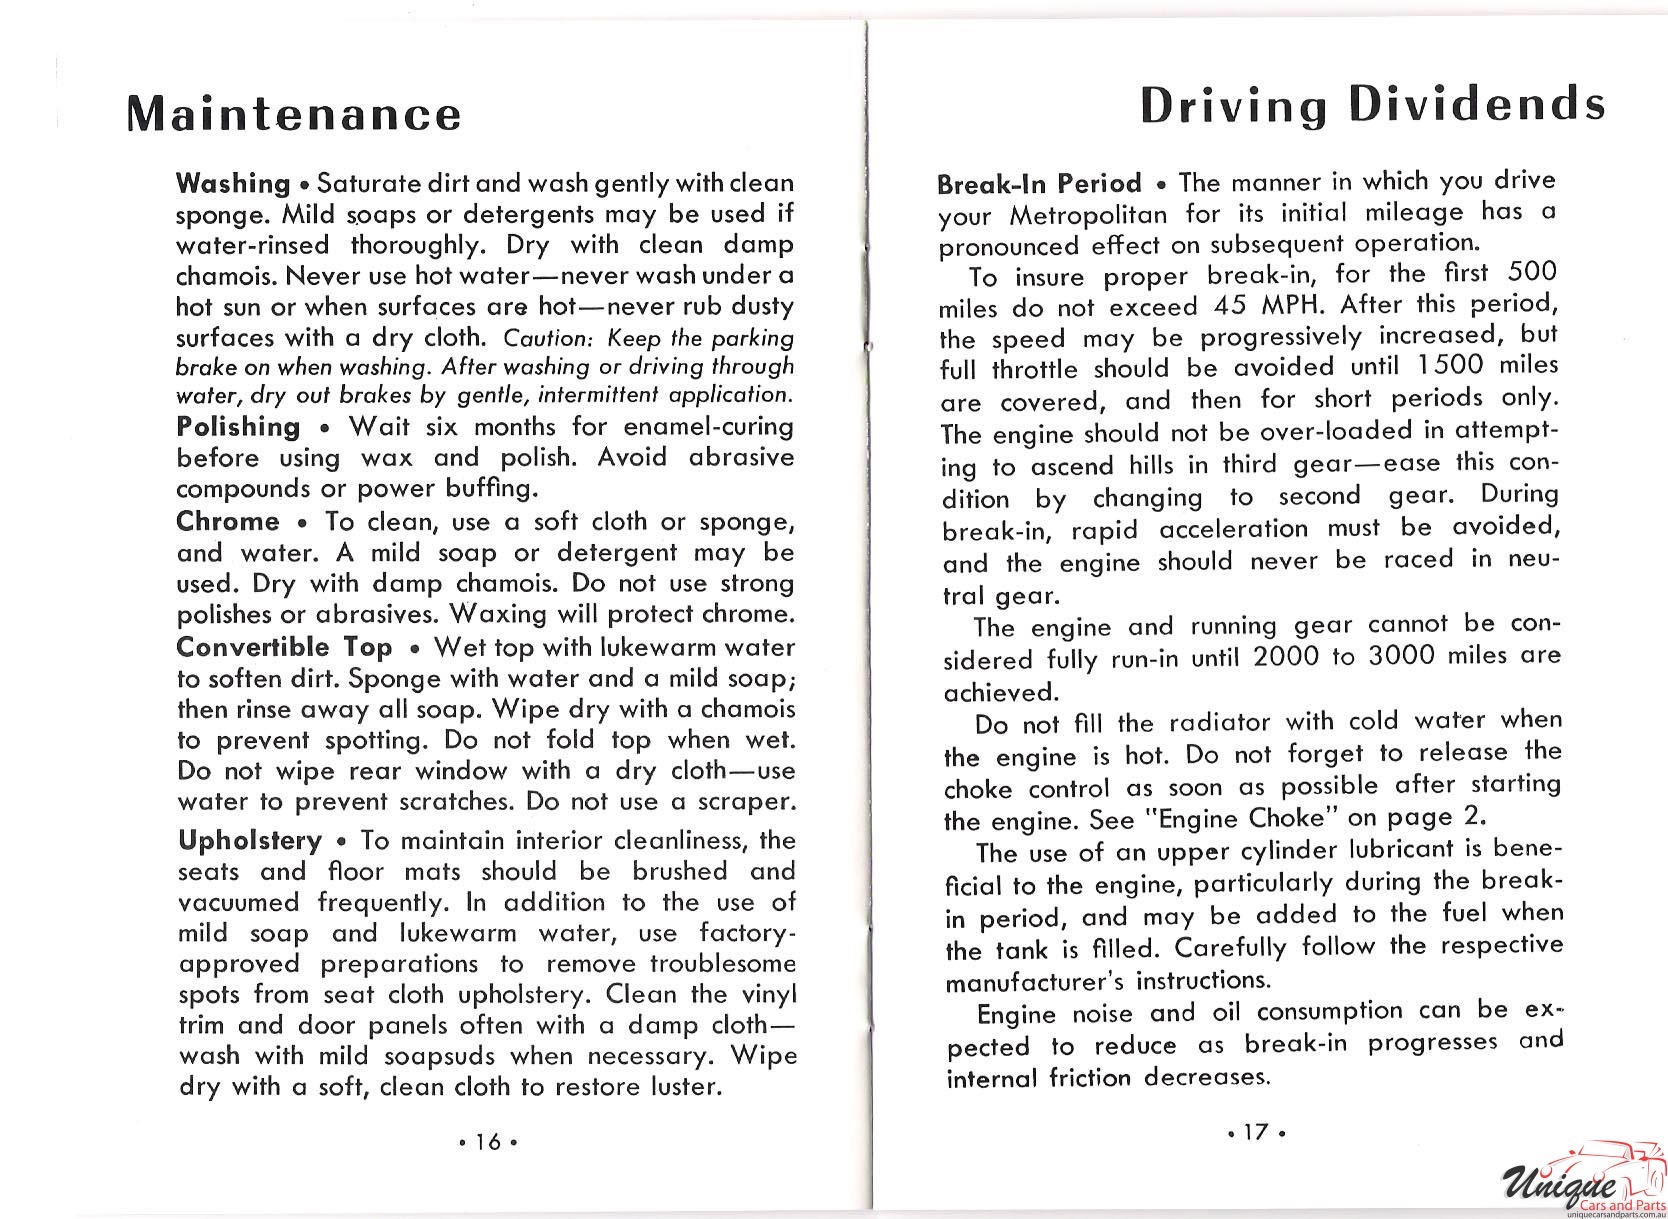 1957 Nash Metropolitan Owners Manual Page 2